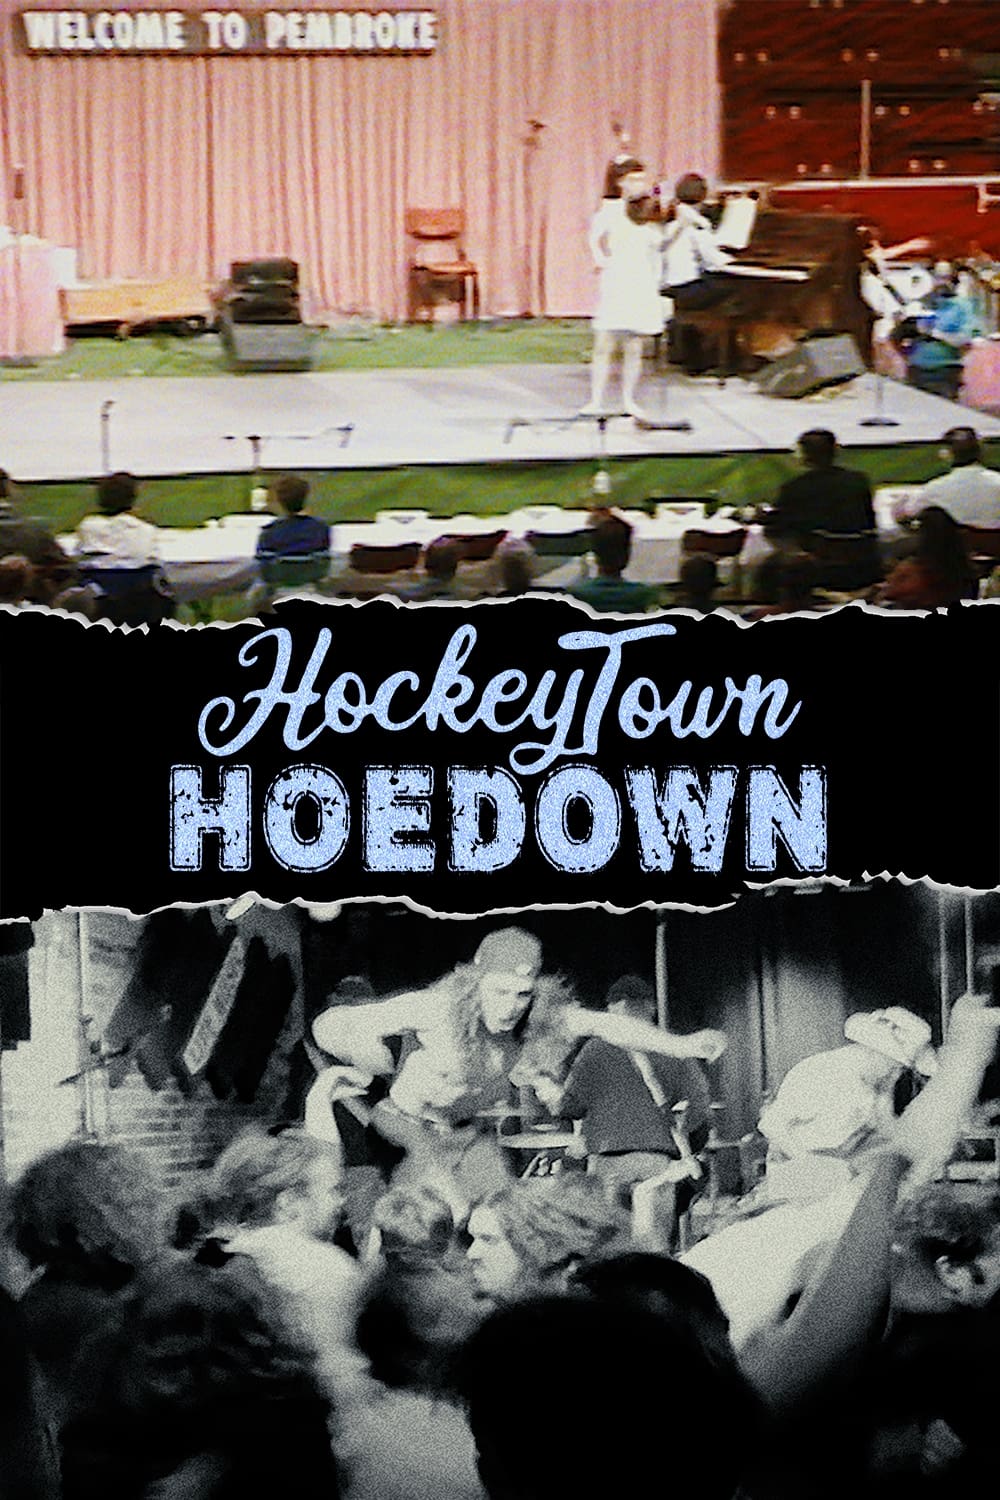 HockeyTown Hoedown